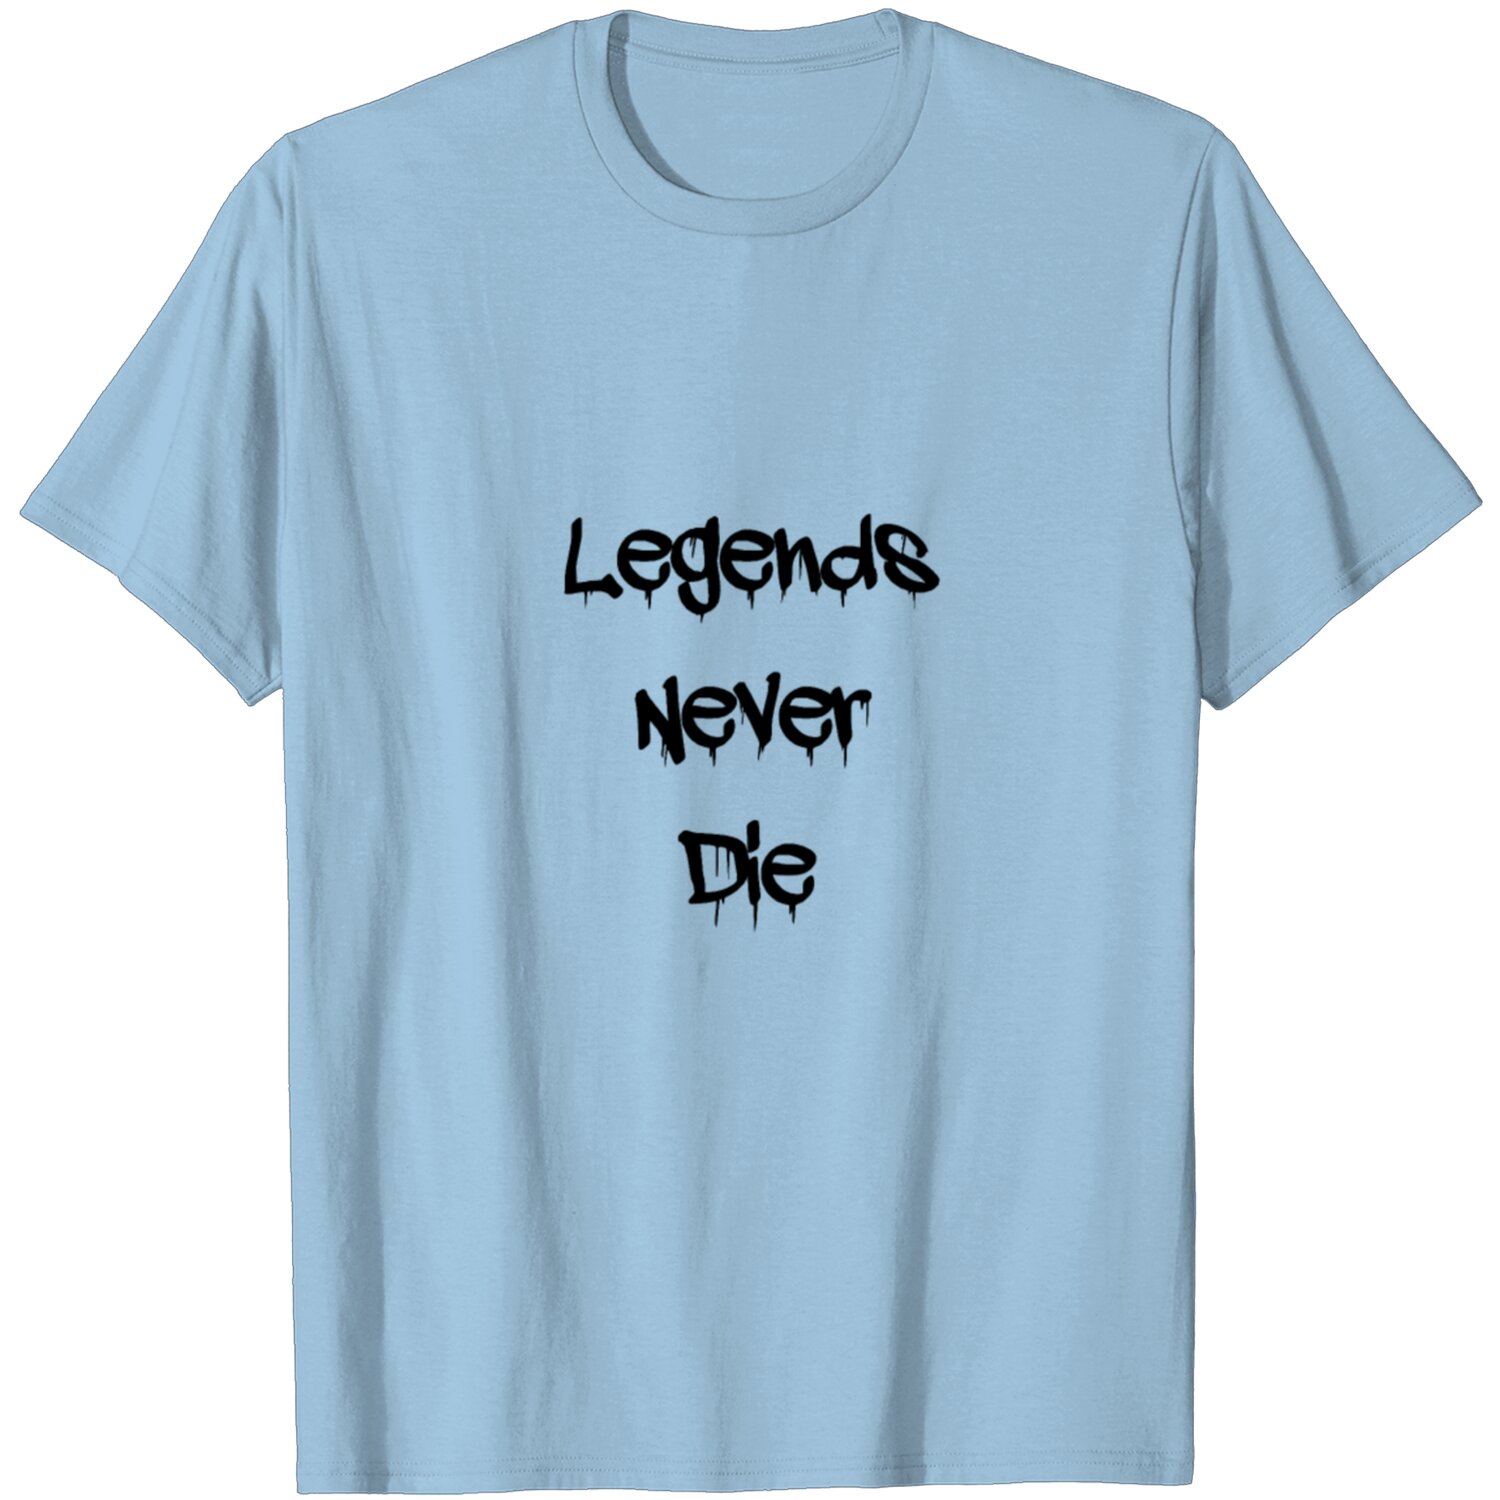 Legends Never Die Clothing T-Shirt DZT02